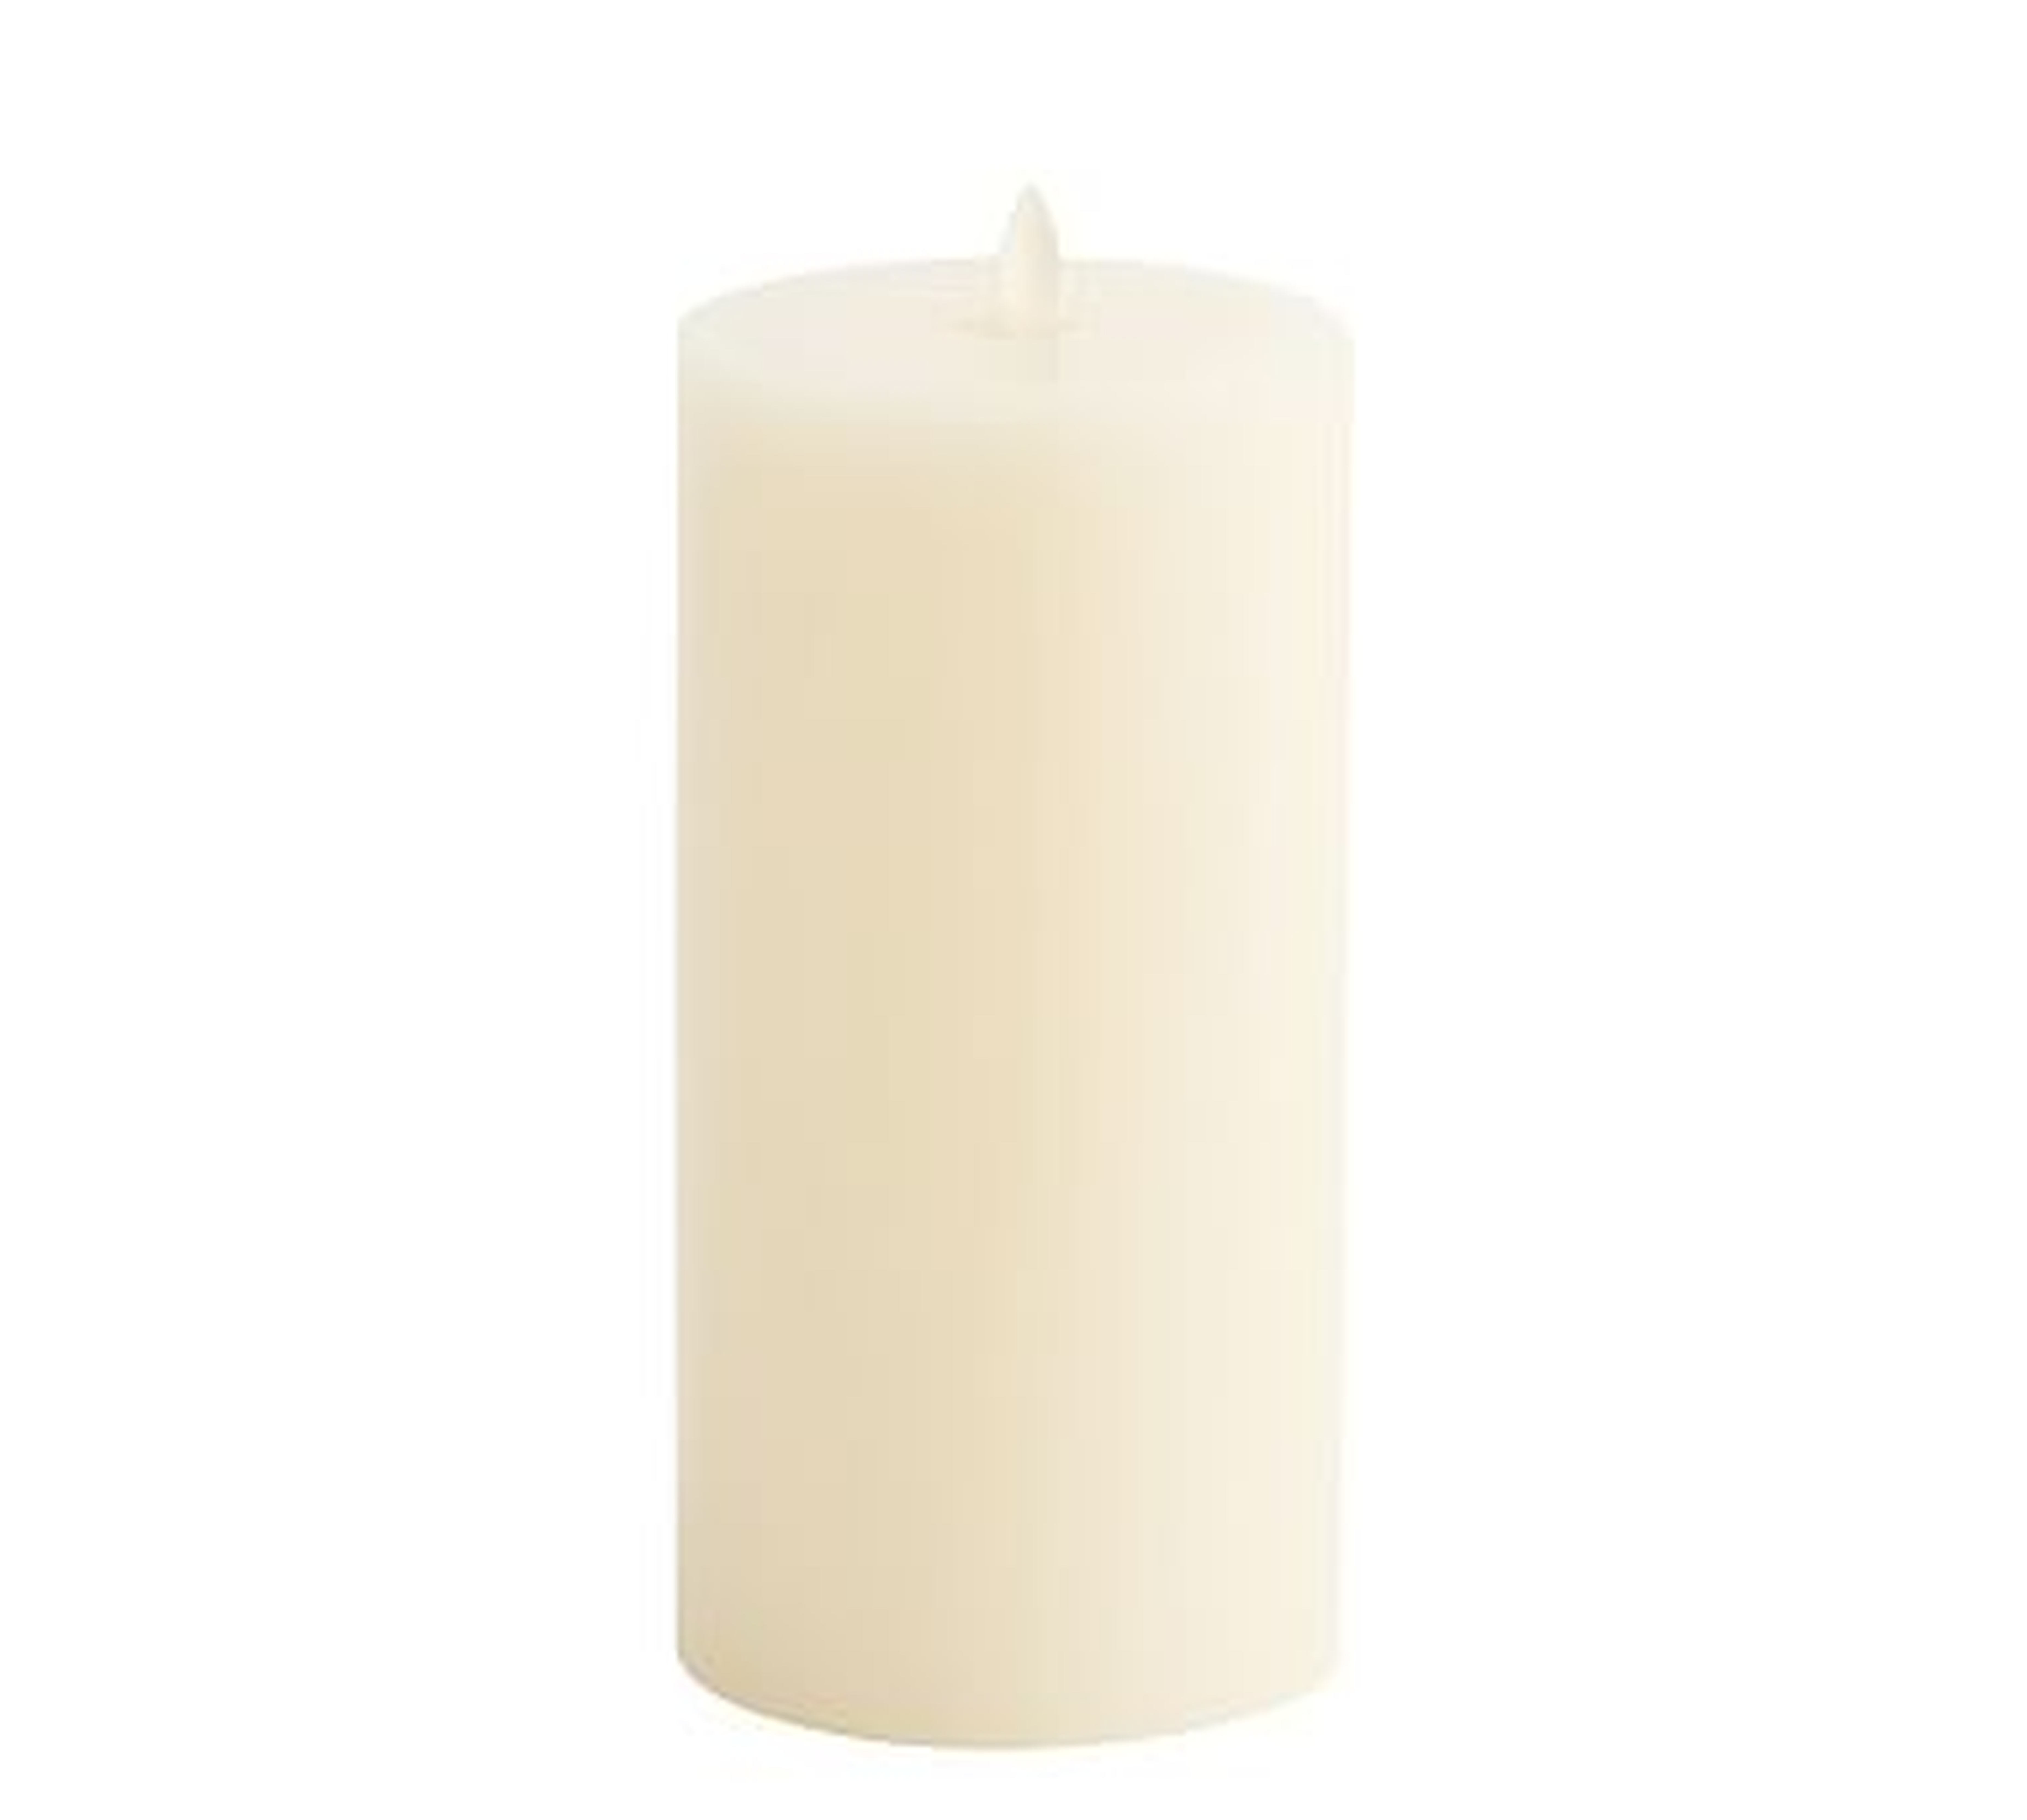 Premium Flickering Flameless Wax Pillar Candle, 3"x6" - Ivory - Pottery Barn